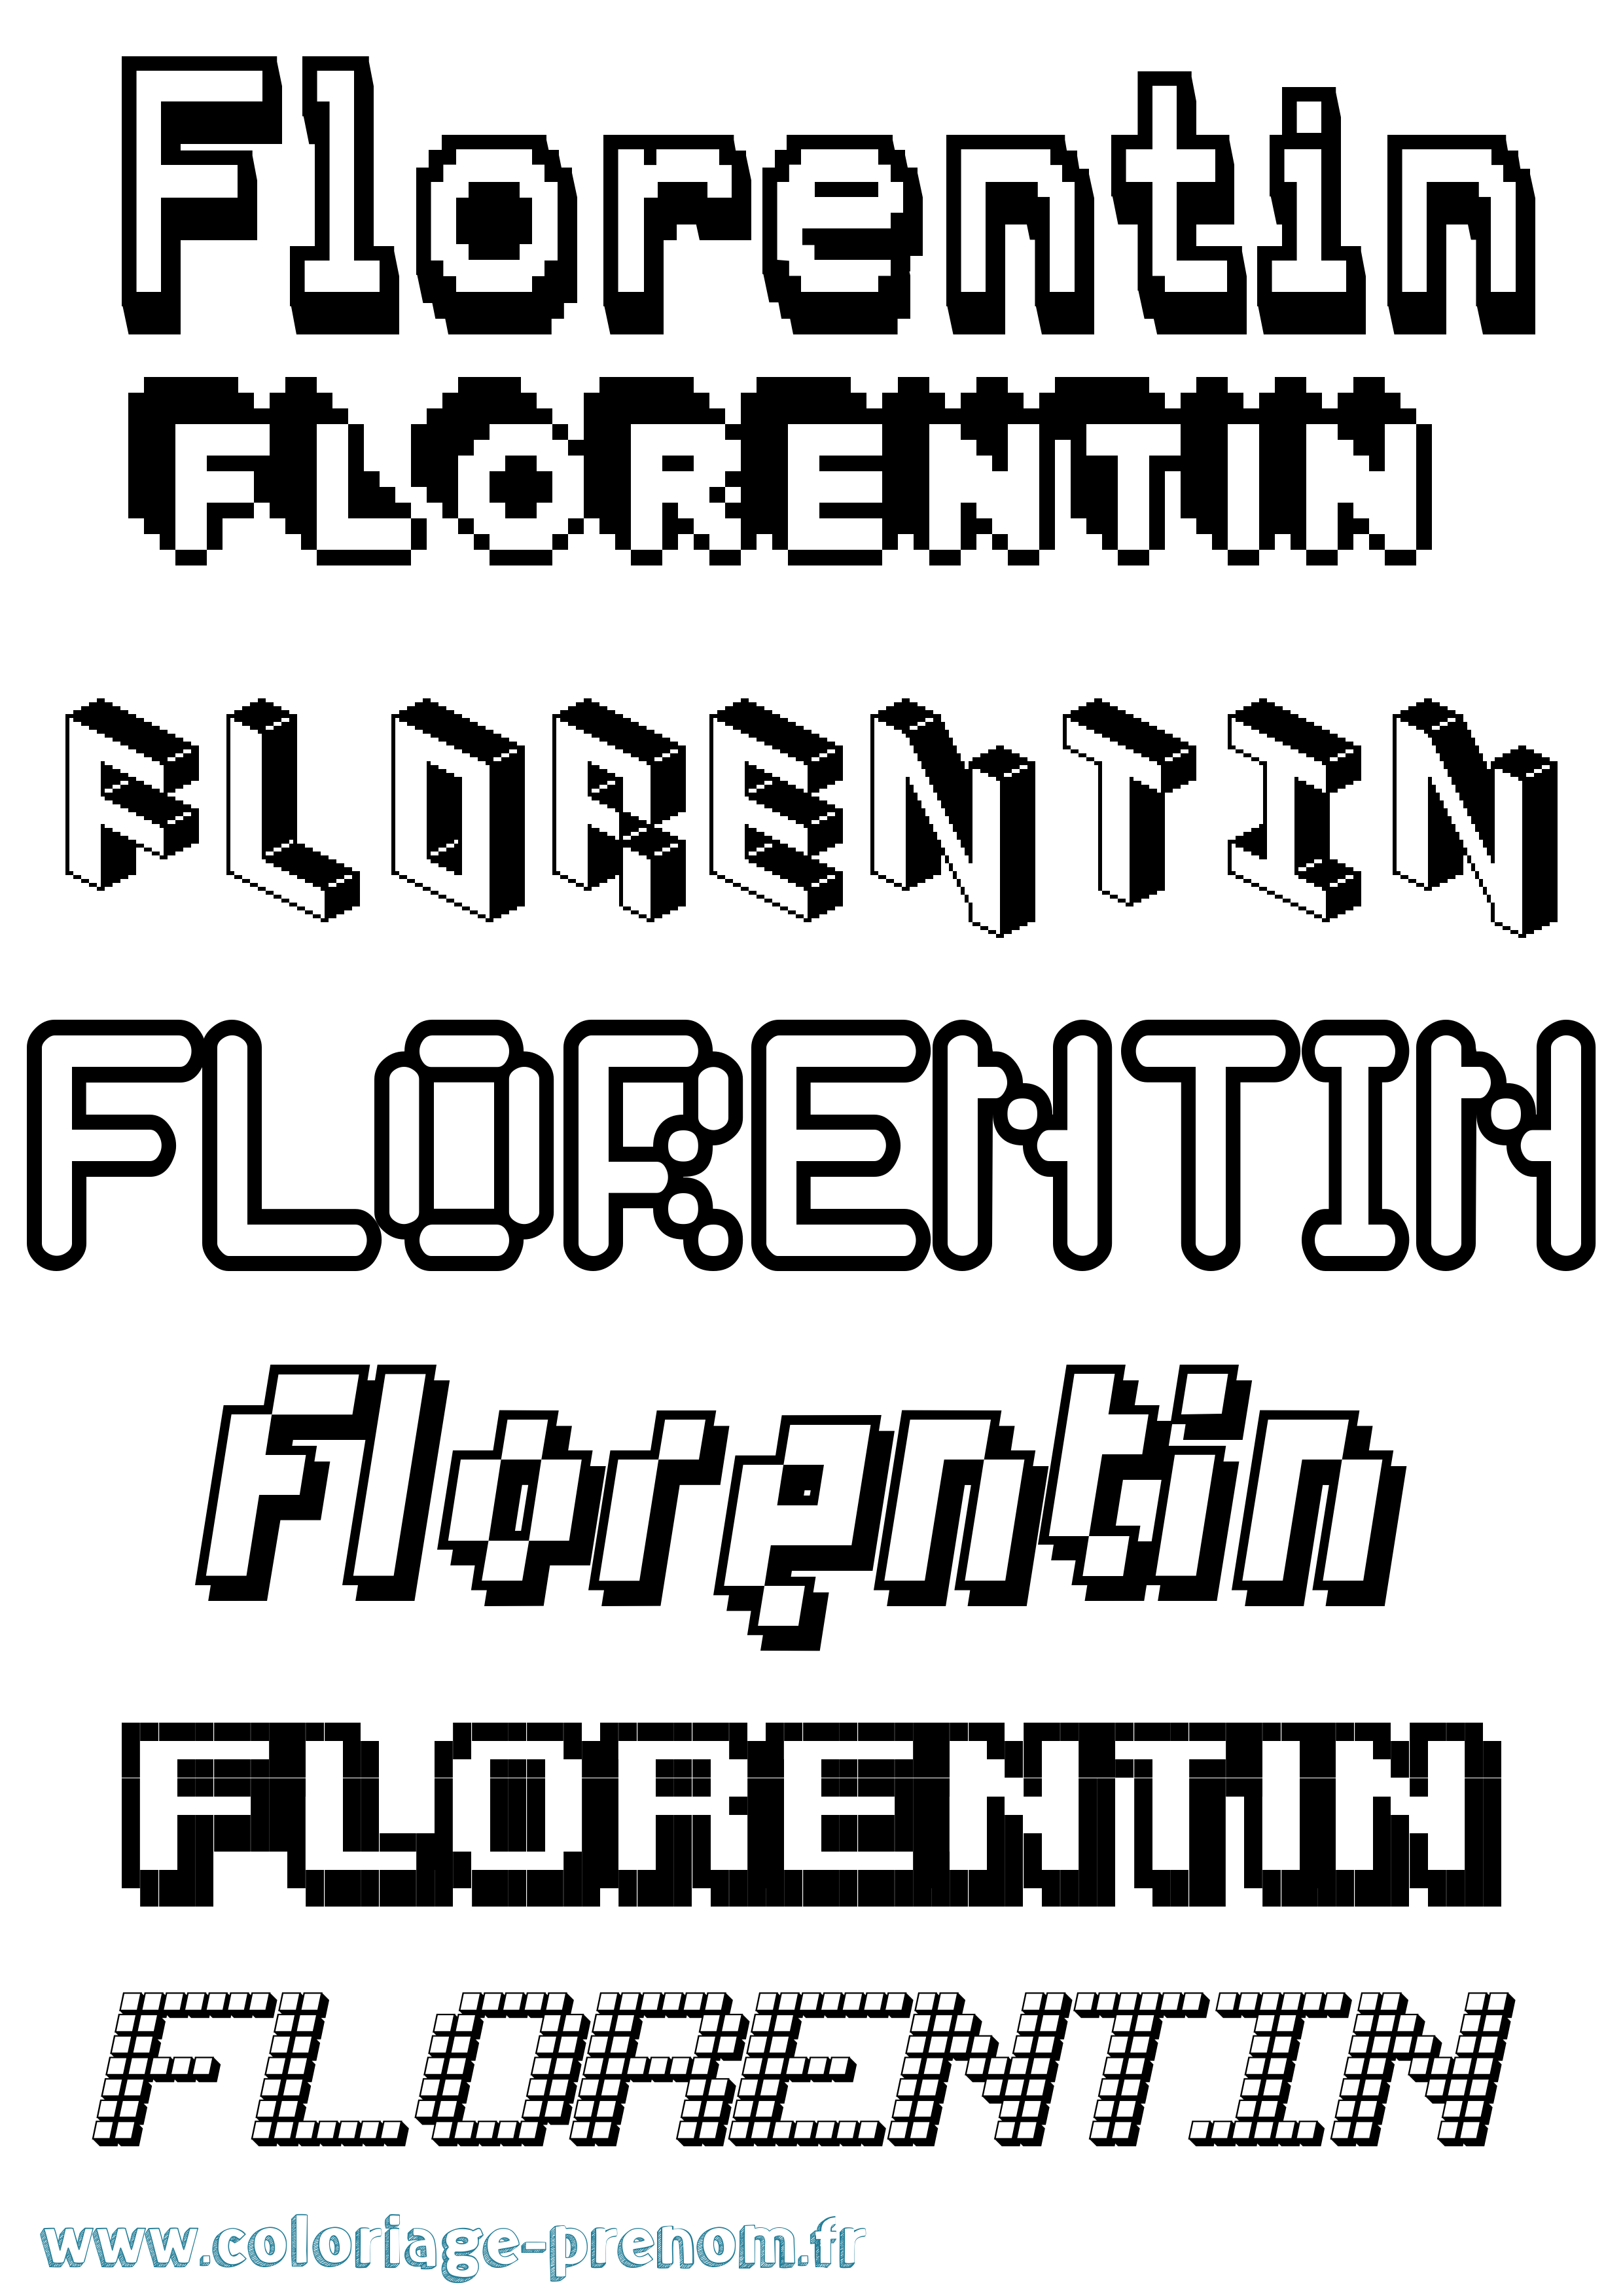 Coloriage prénom Florentin